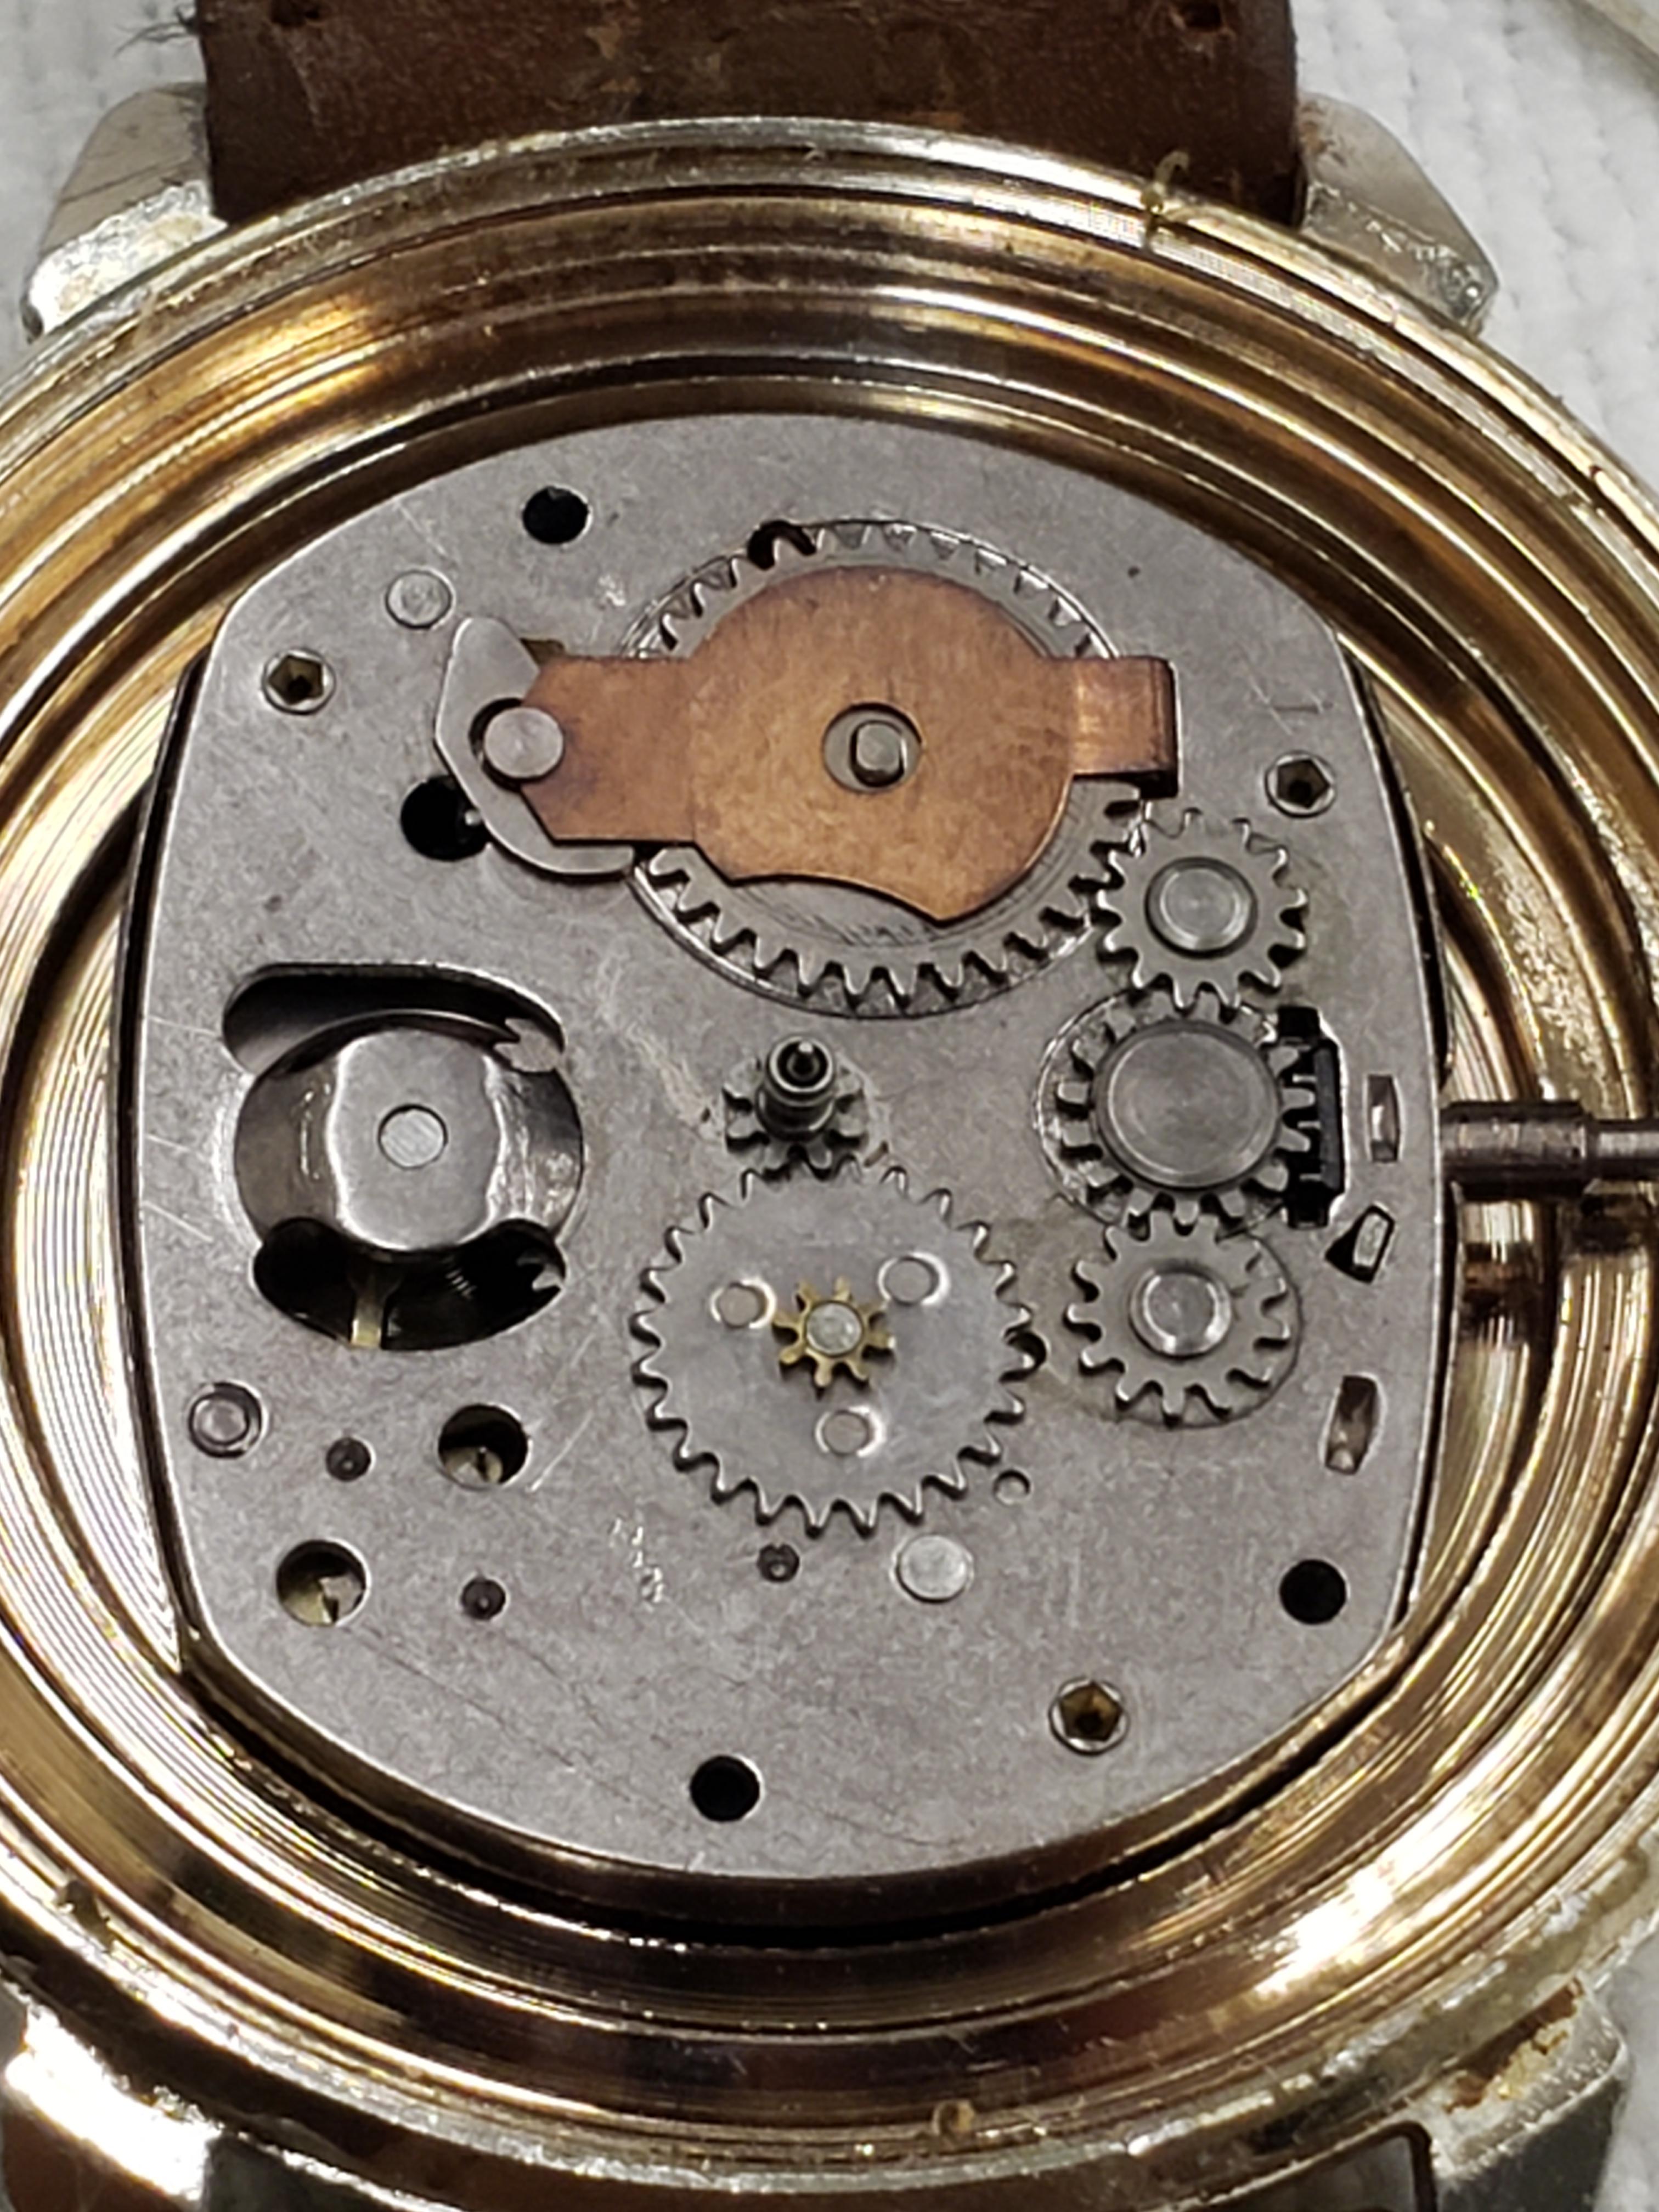 Timex 100 stem removal - Watch Repairs Help & Advice - Watch Repair Talk